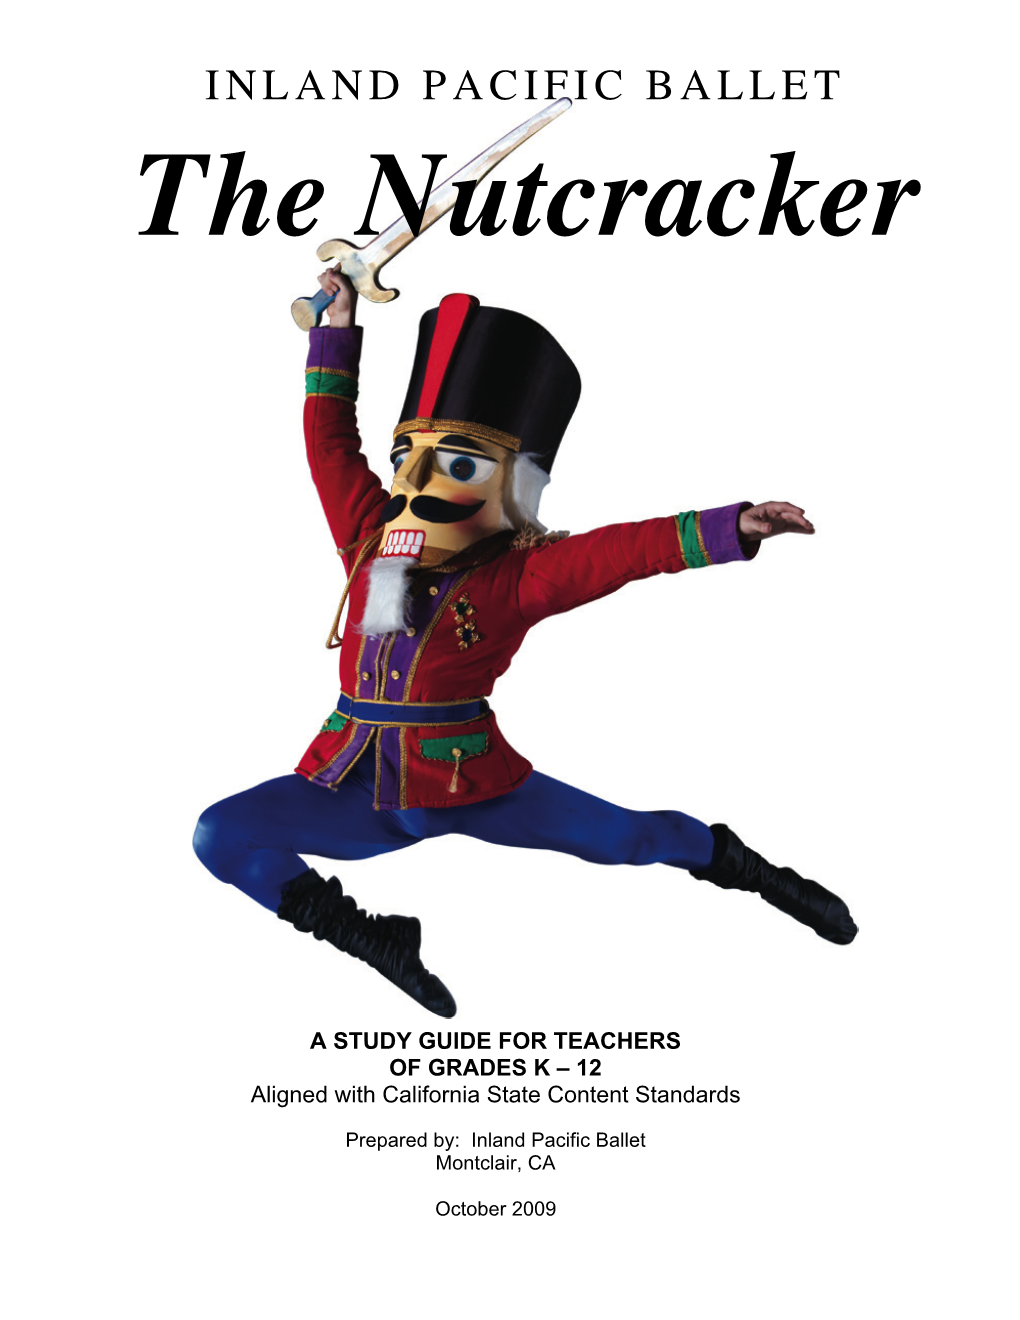 The Nutcracker Study Guide